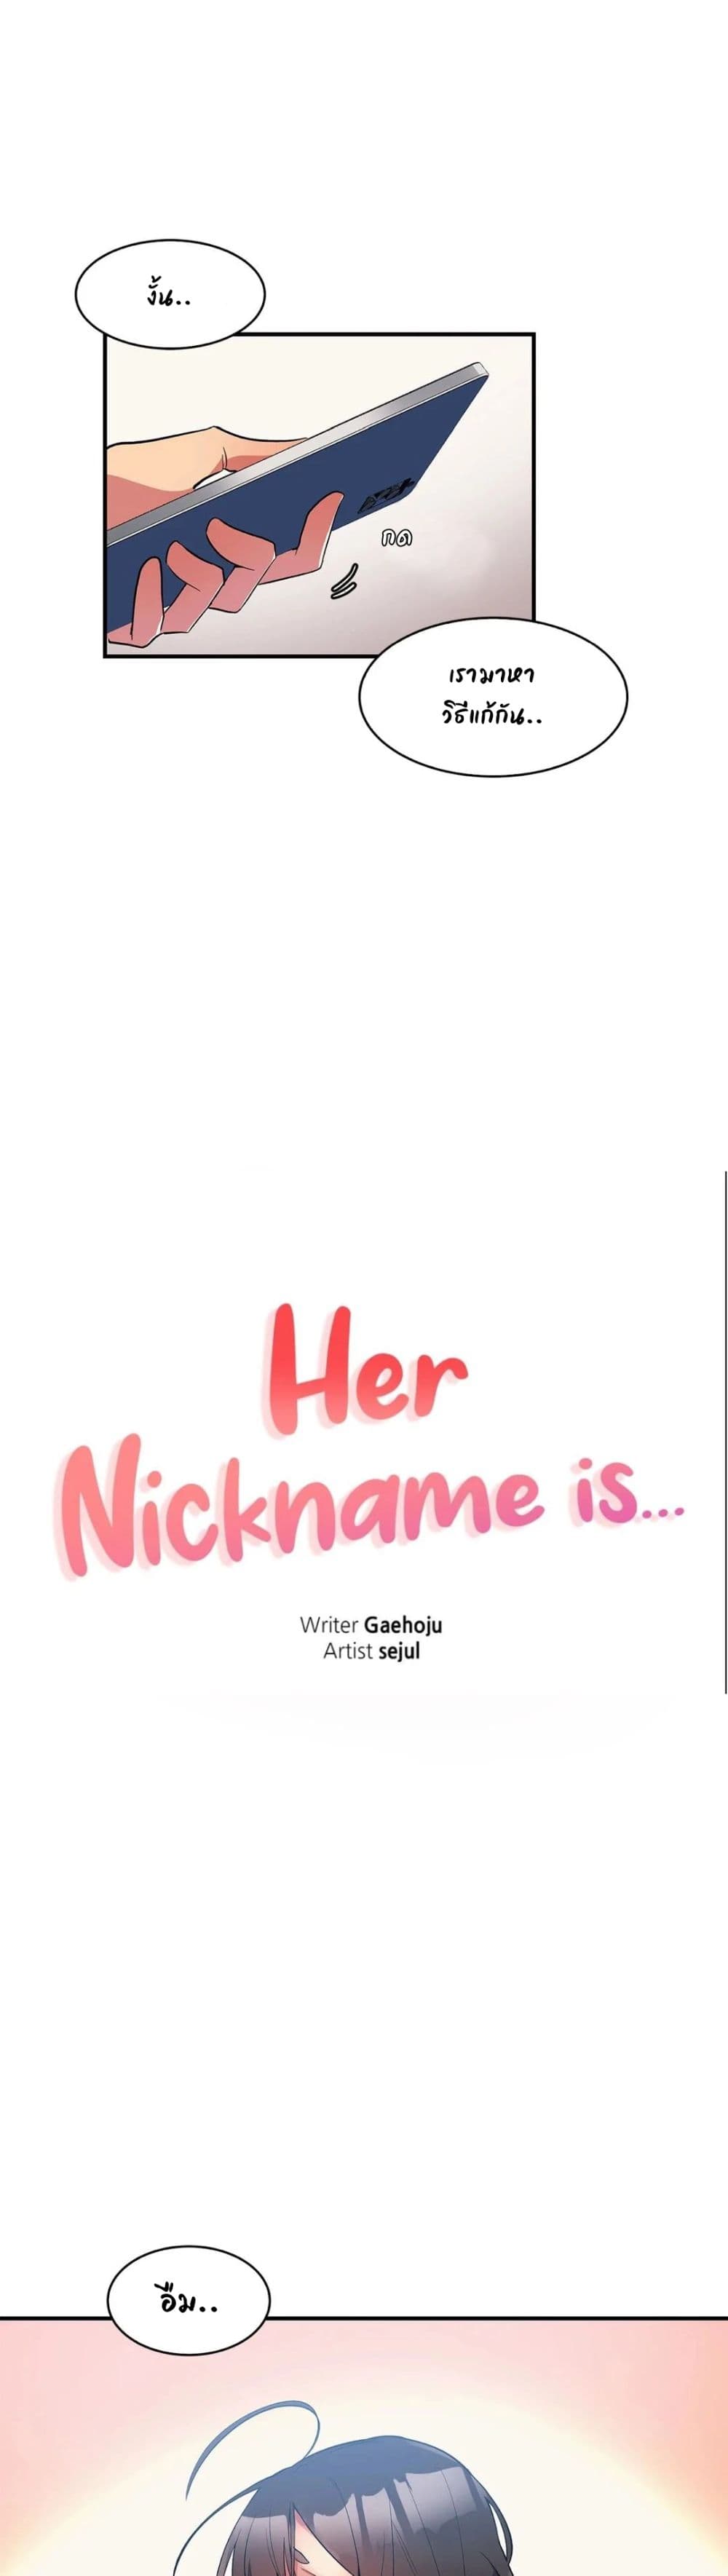 Her Nickname is... 2 07